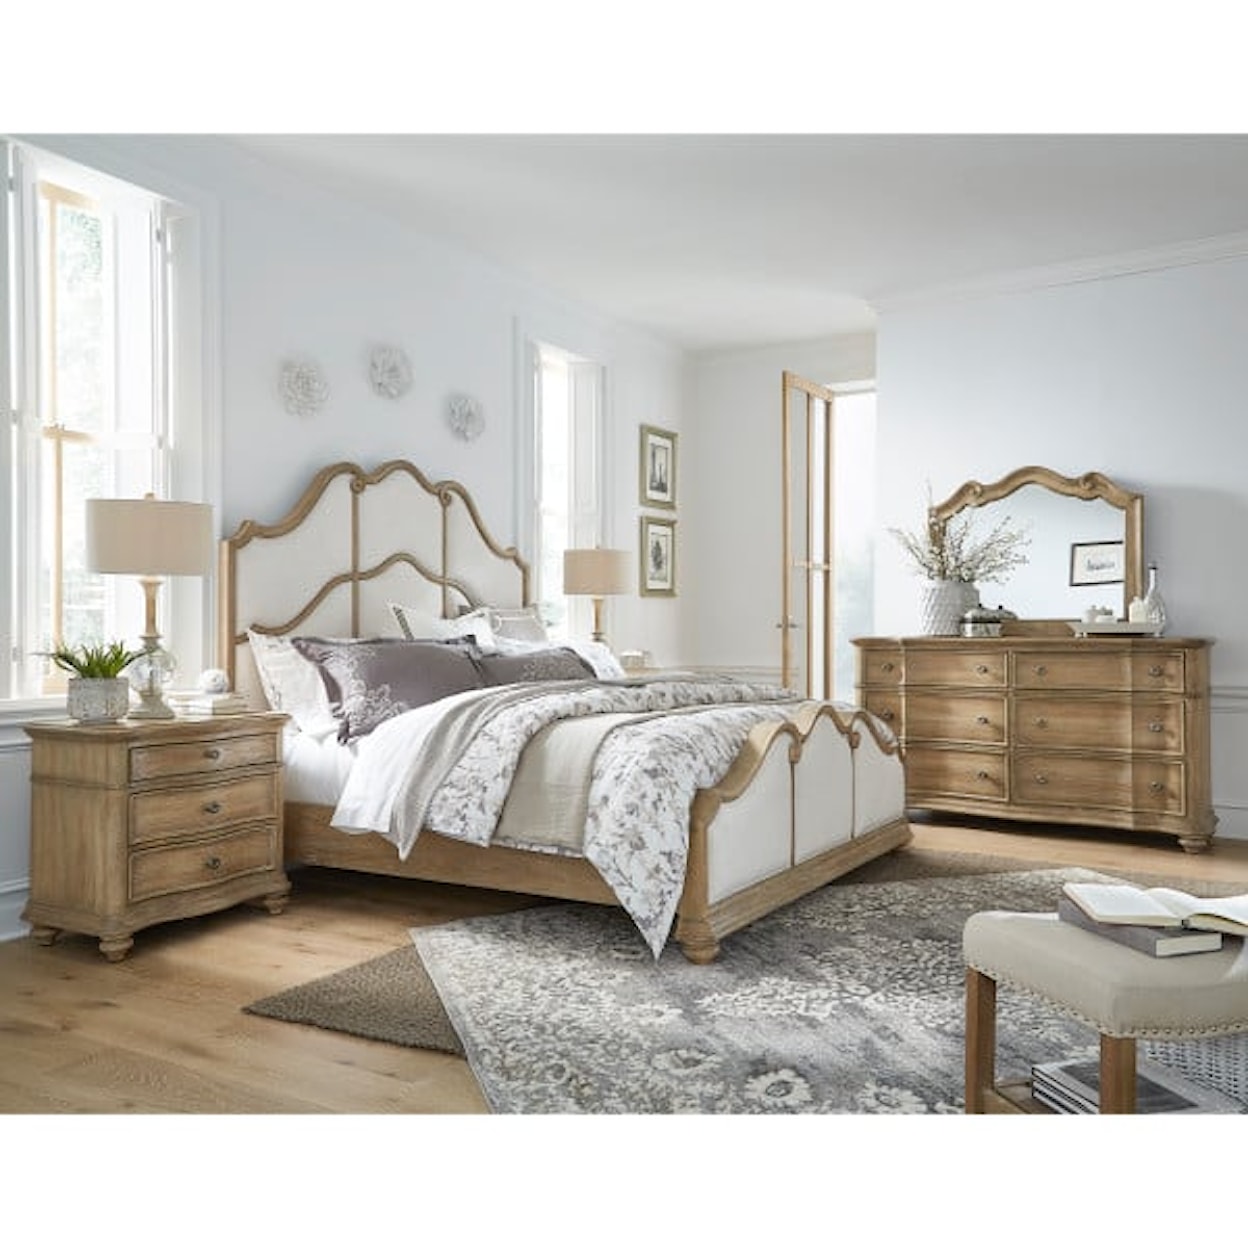 Pulaski Furniture Weston Hills King Bedroom Group